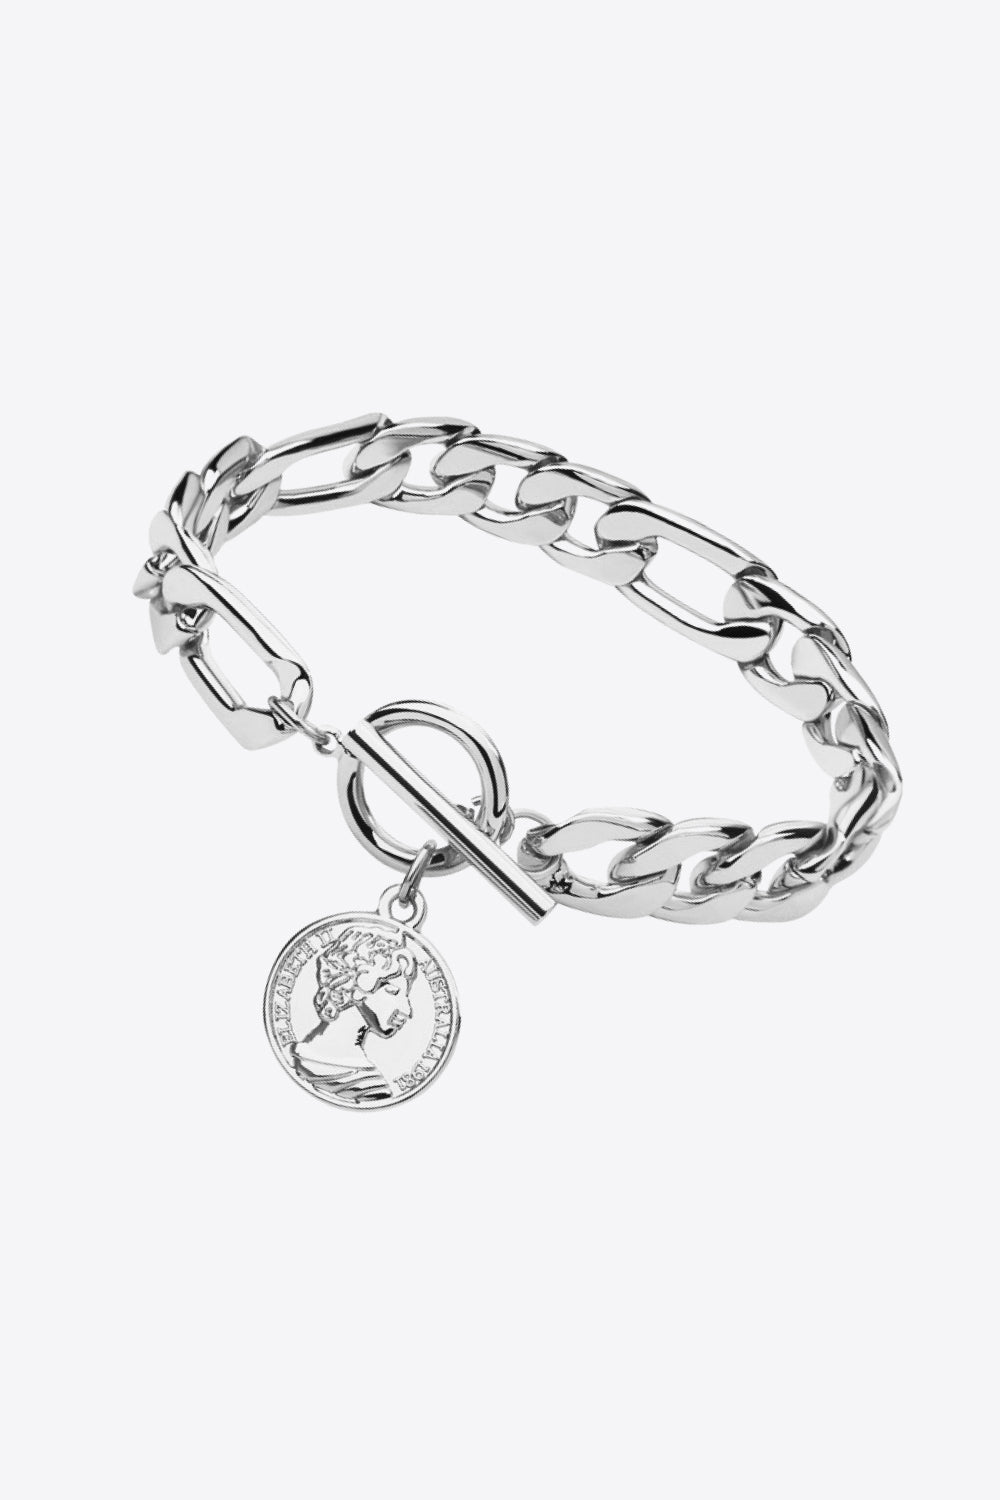 Chunky Chain Toggle Clasp Bracelet - Women’s Jewelry - Bracelets - 5 - 2024